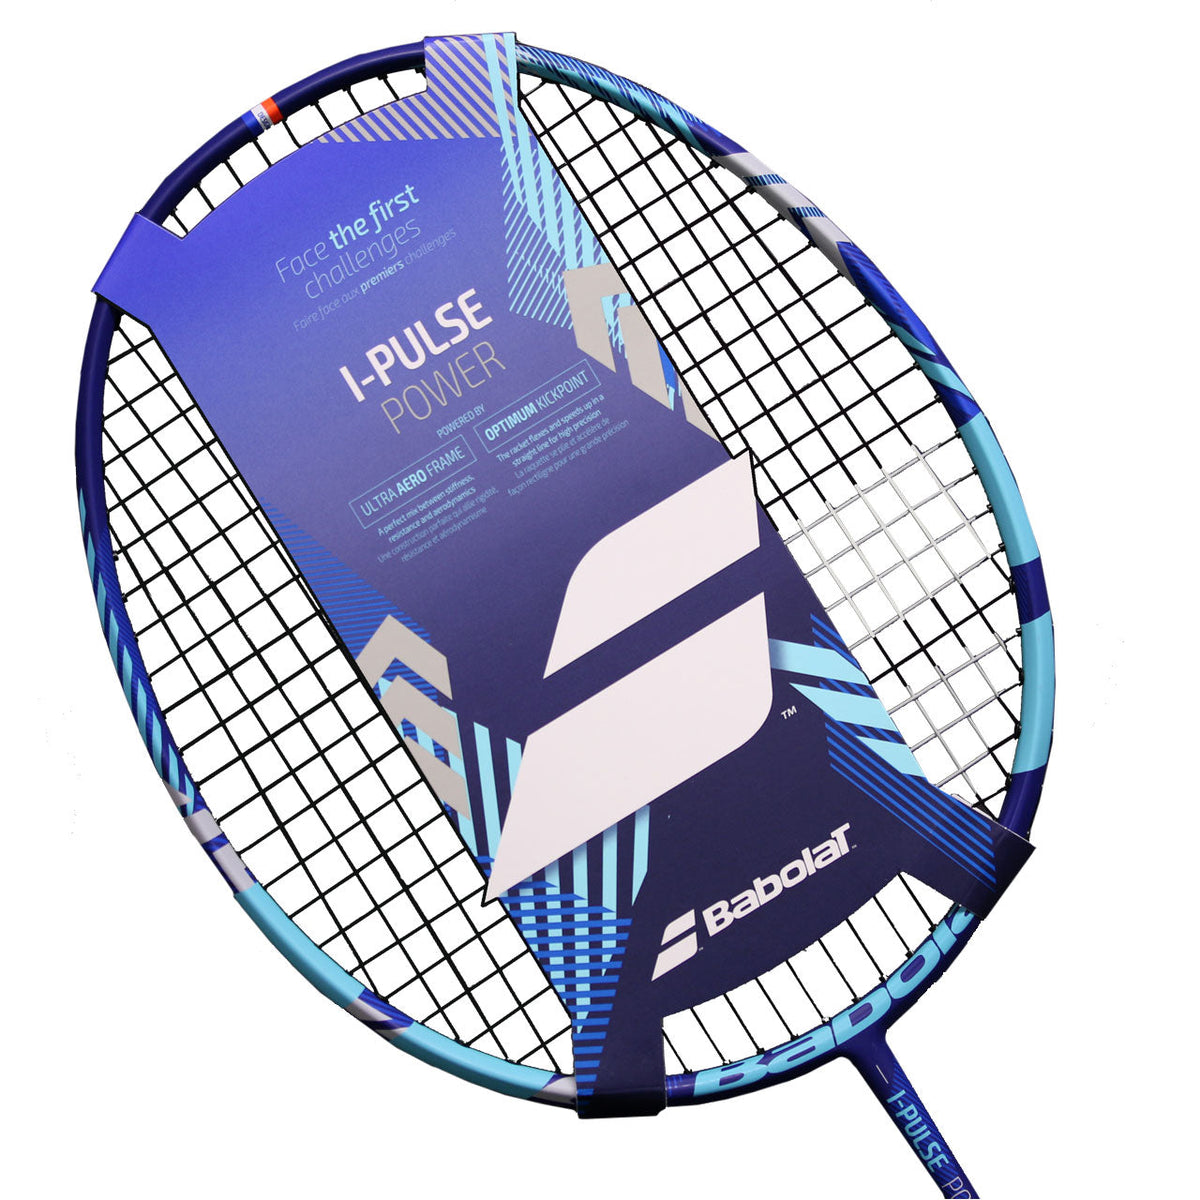 Babolat I-Pulse Power Badminton Racket 601390 (Strung)